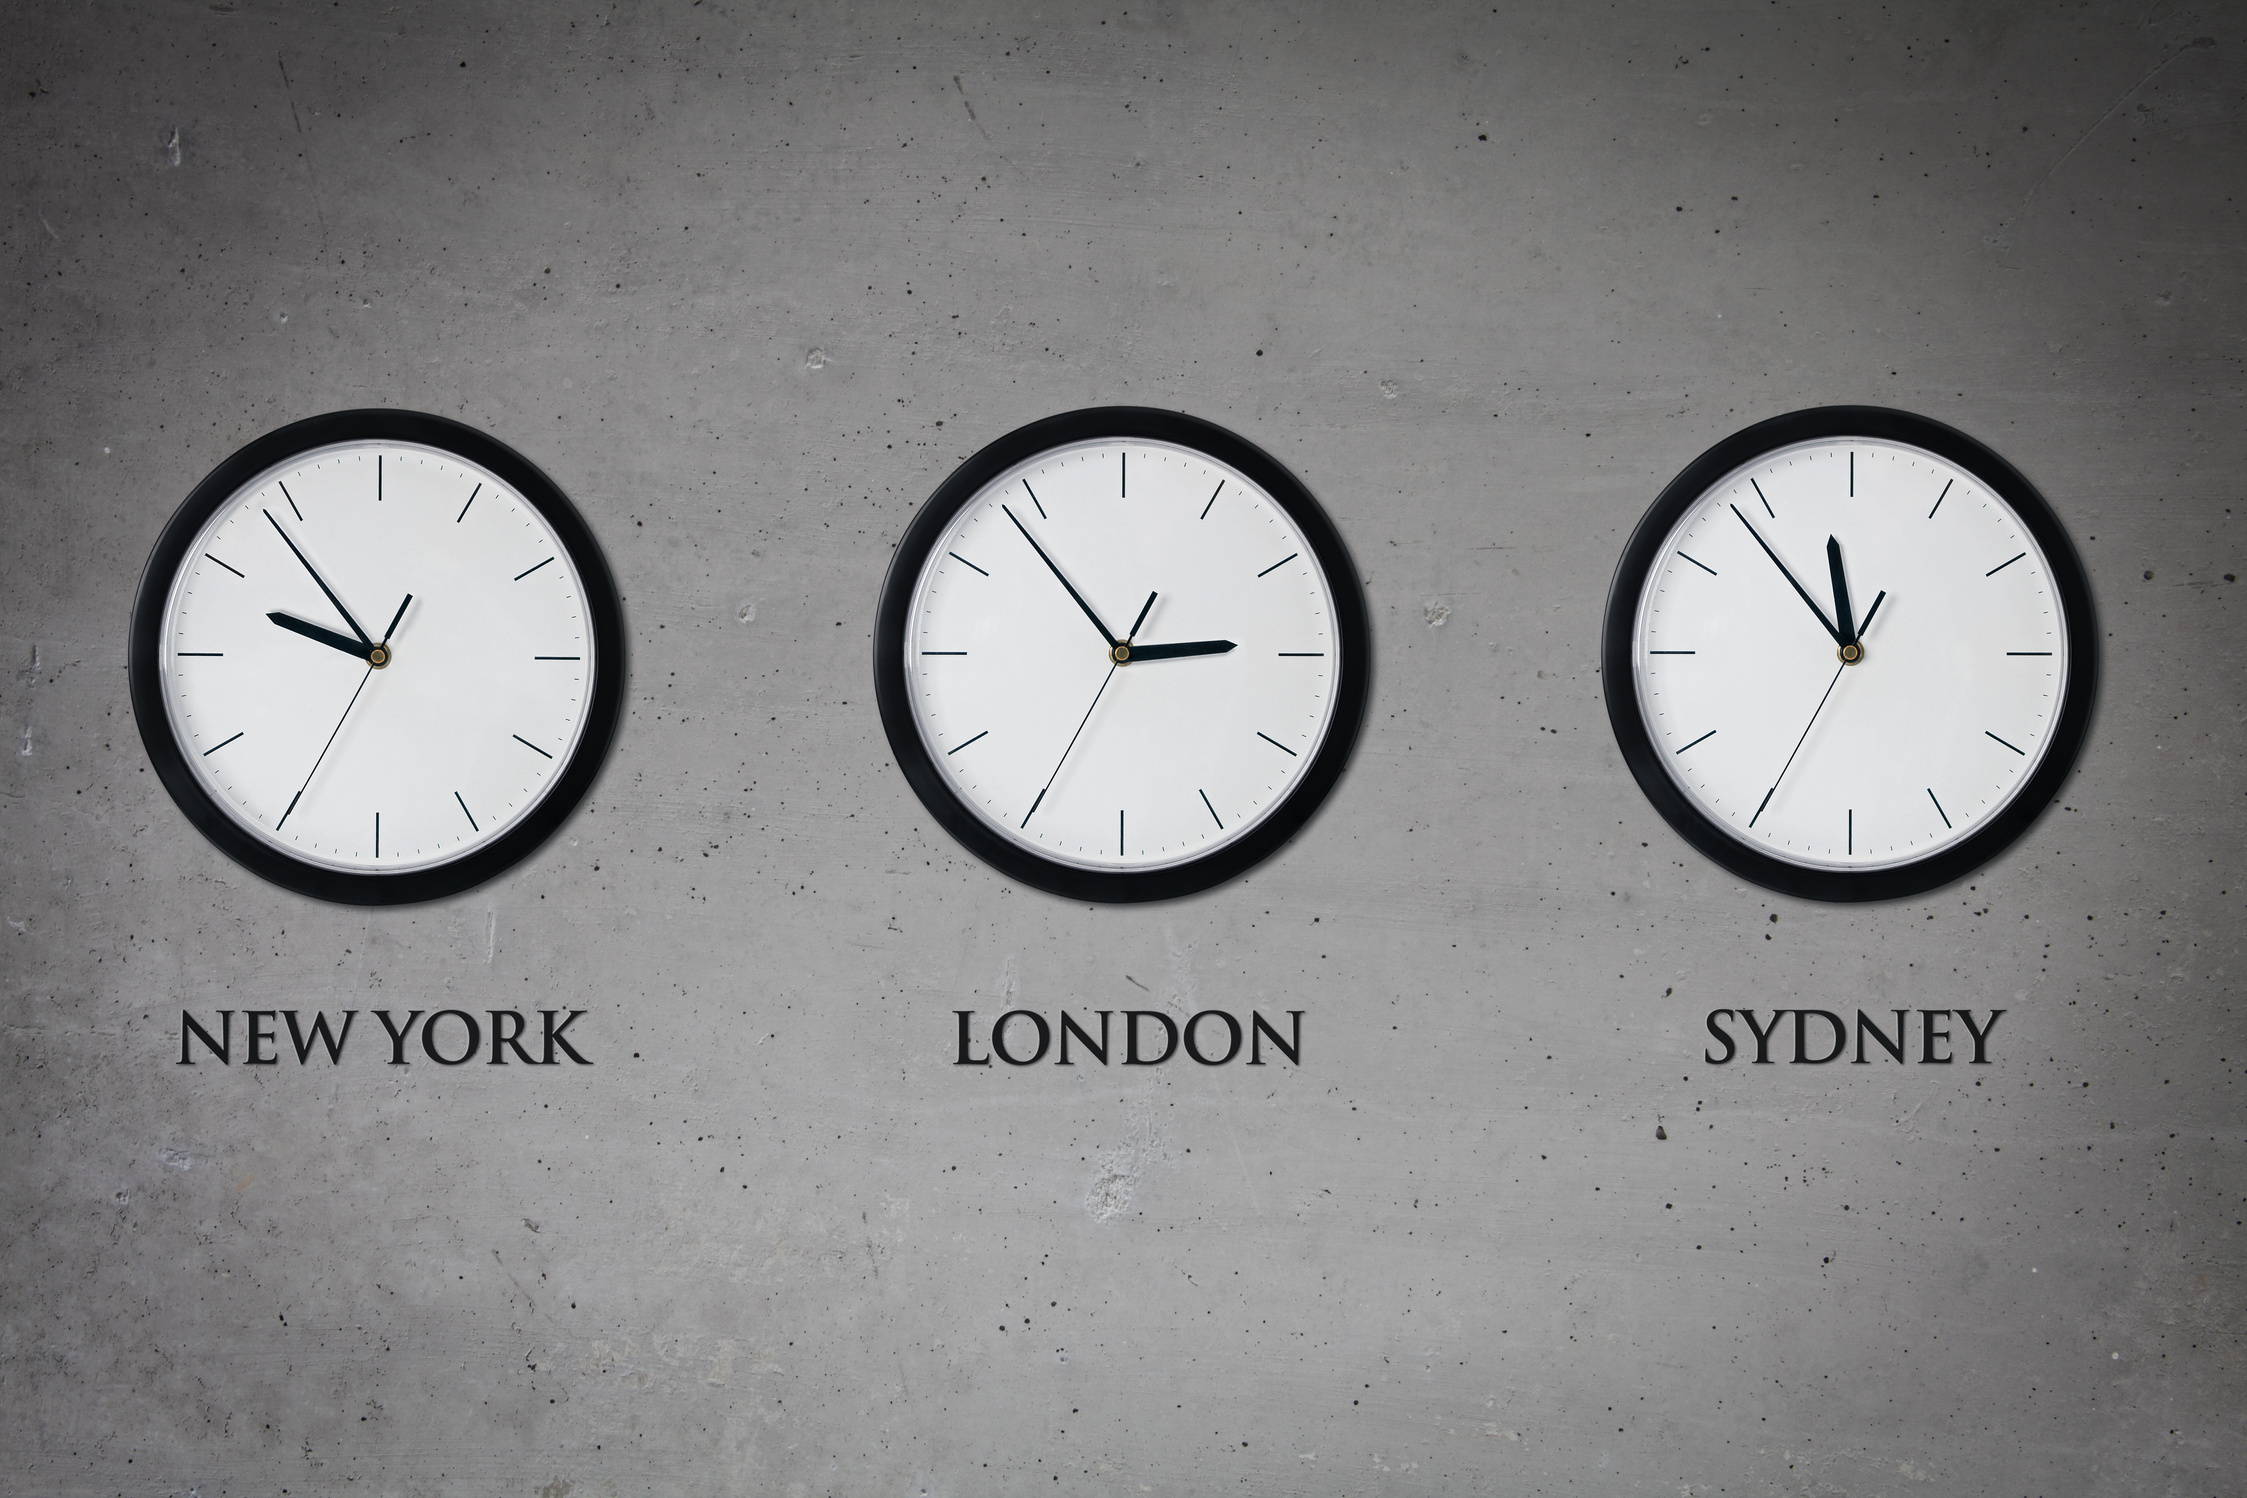 The World Clocks – Time Zones